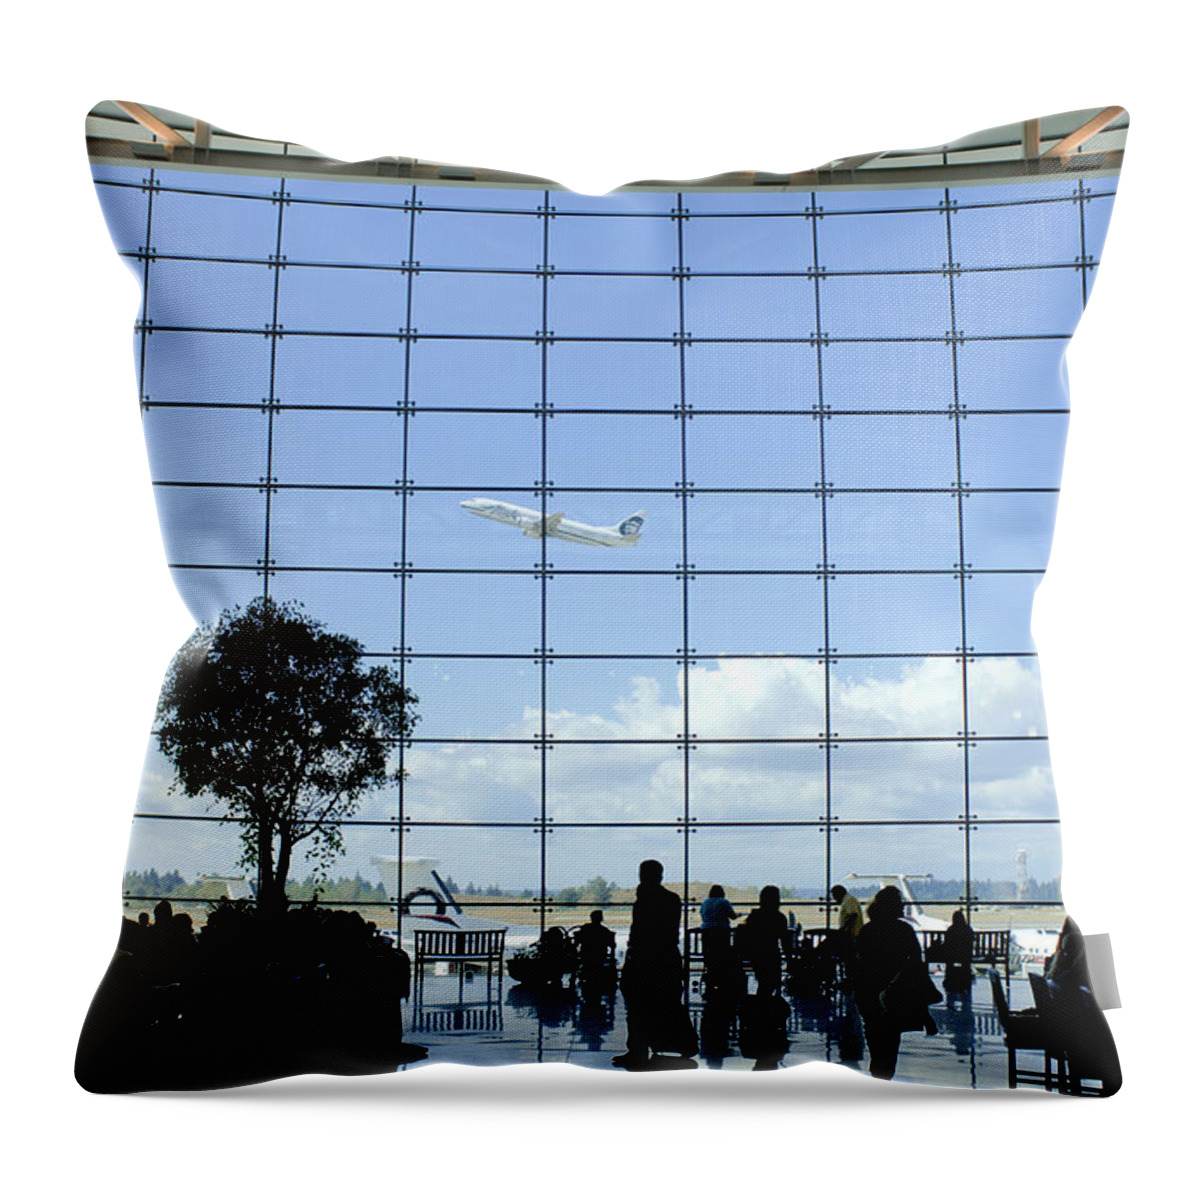 Aircraft Throw Pillow featuring the photograph SEATAC airport K088 by Yoshiki Nakamura